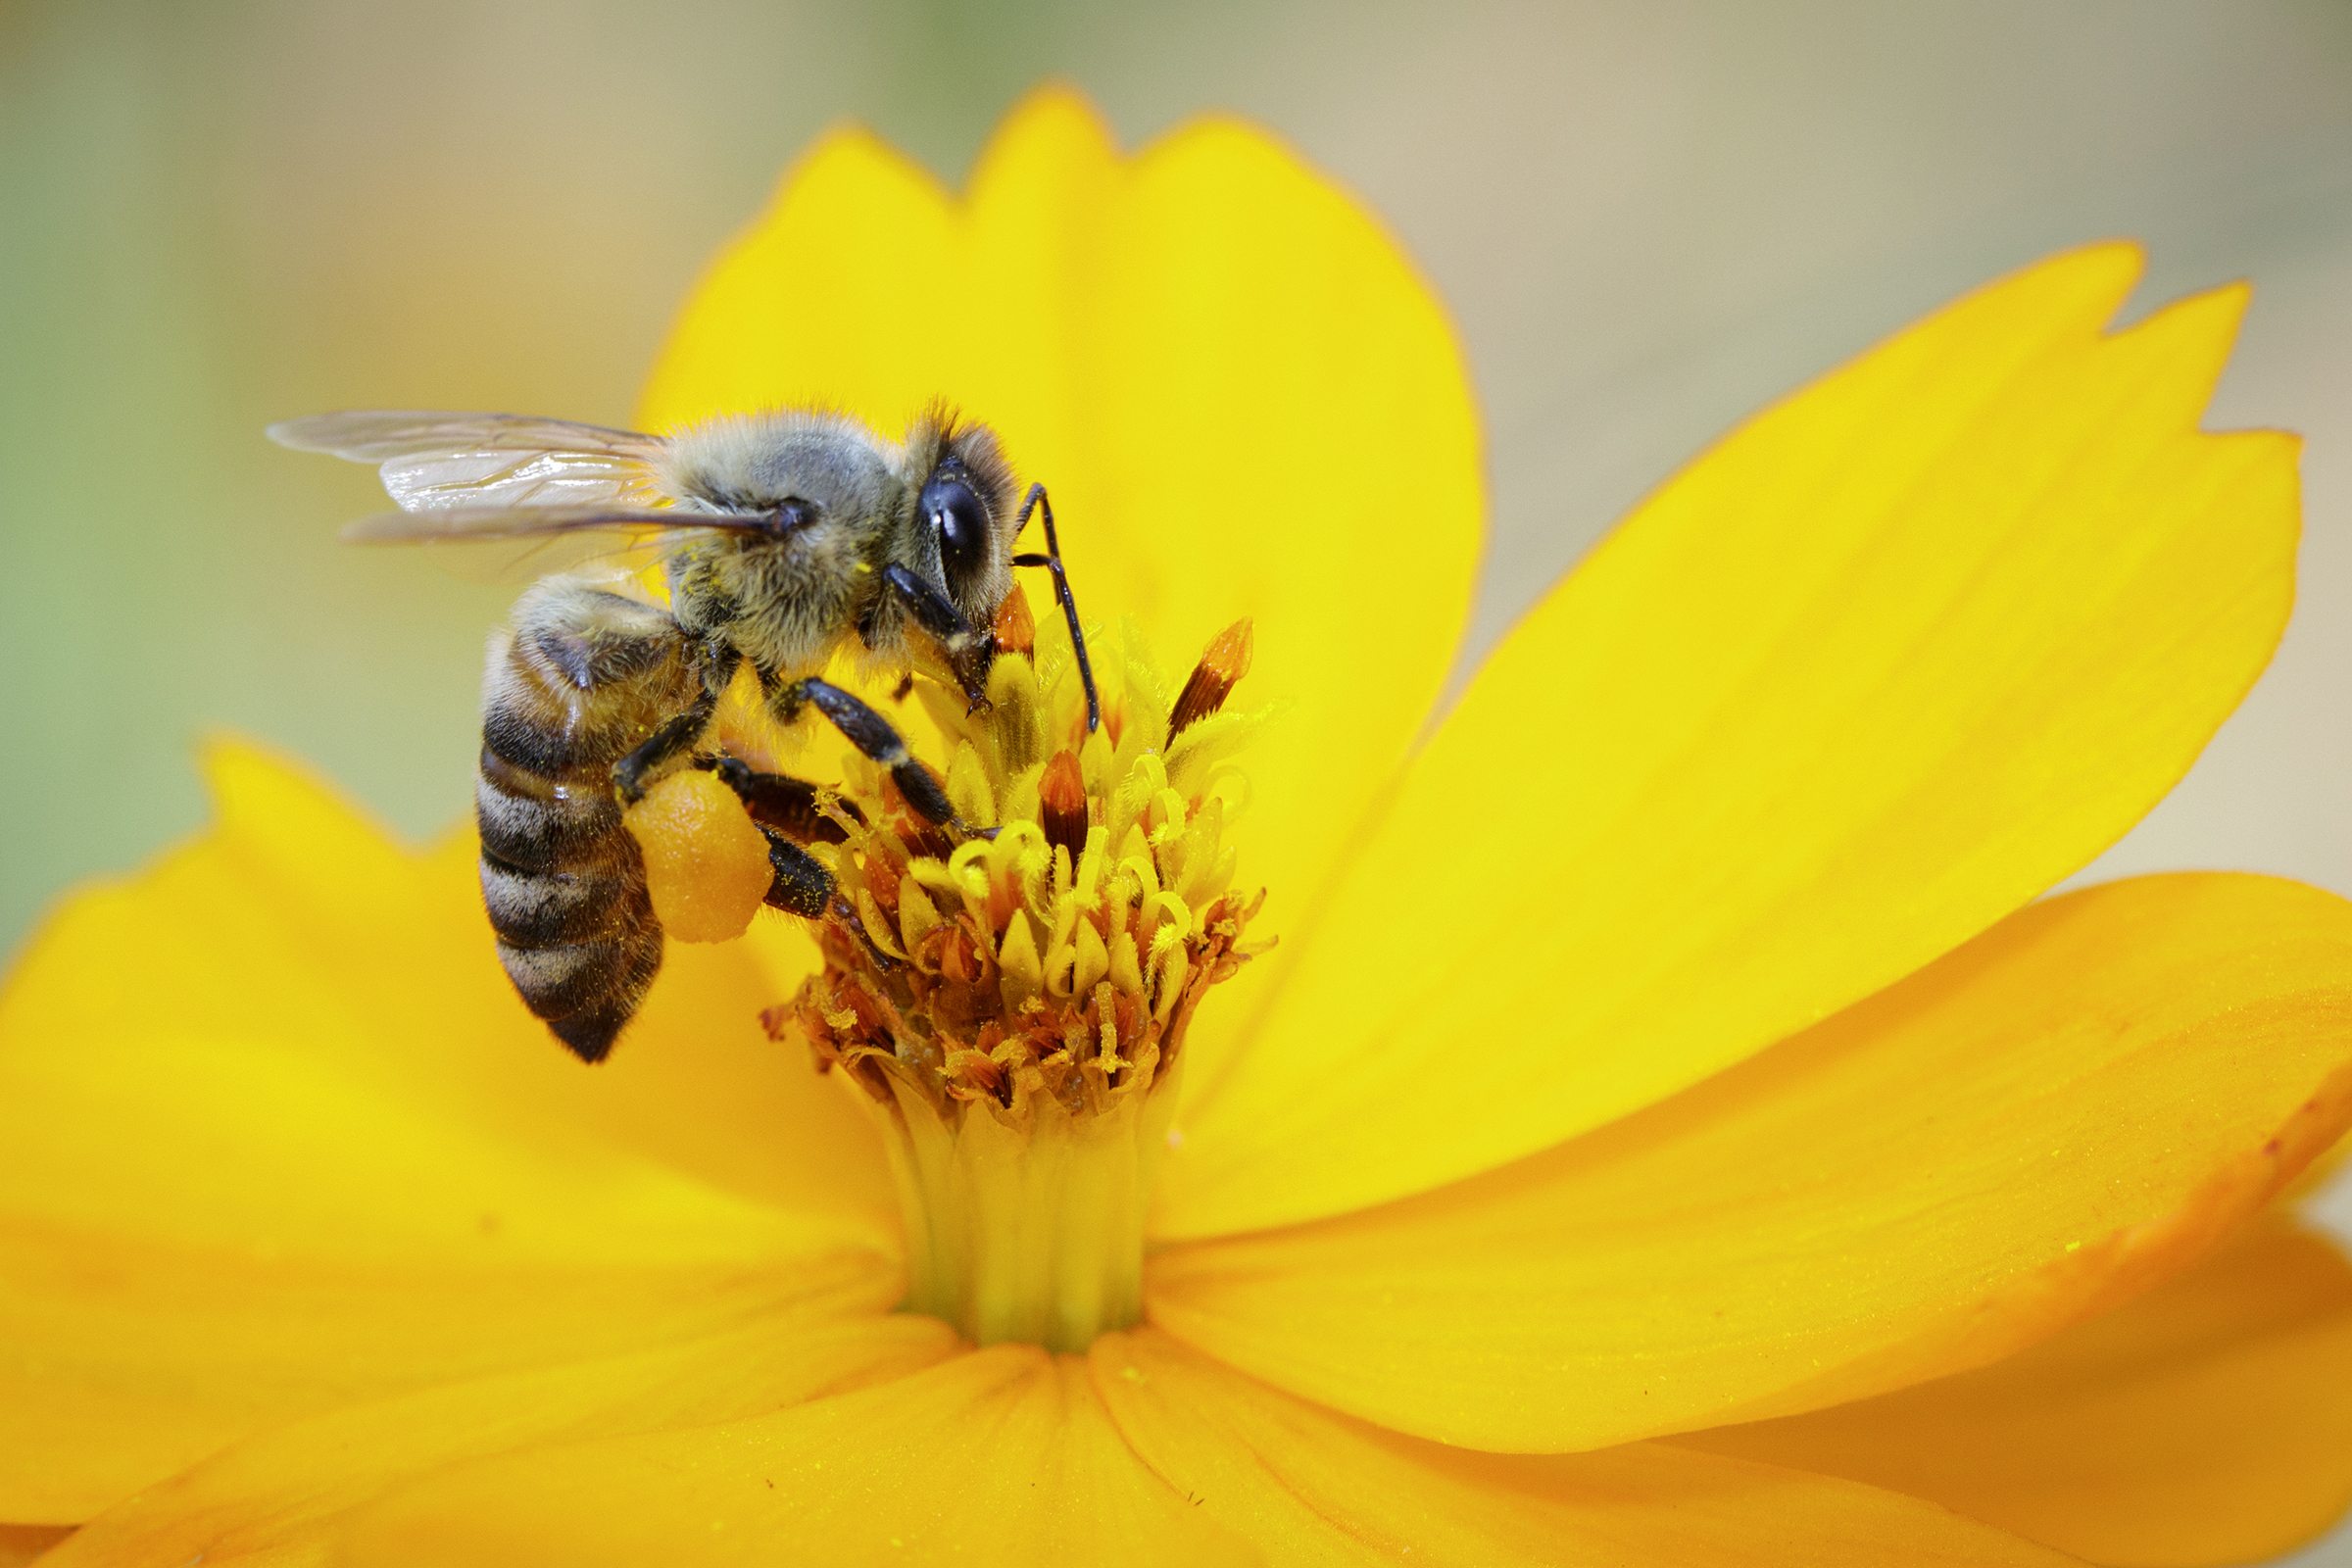 Shotton Honey Bee